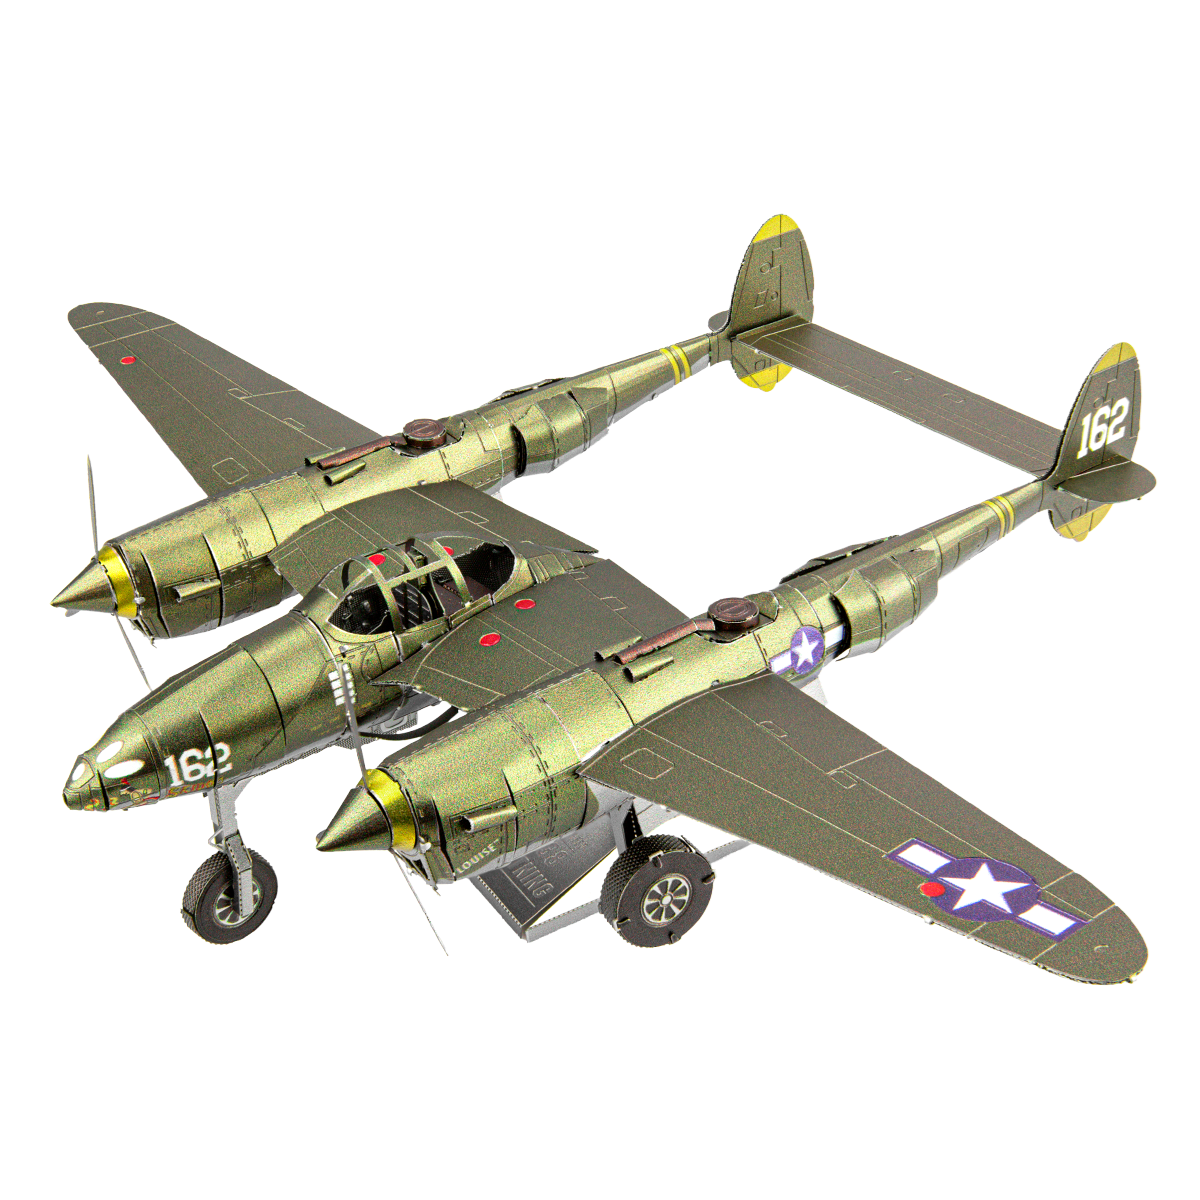 METAL EARTH ICONX P-38 Lightning